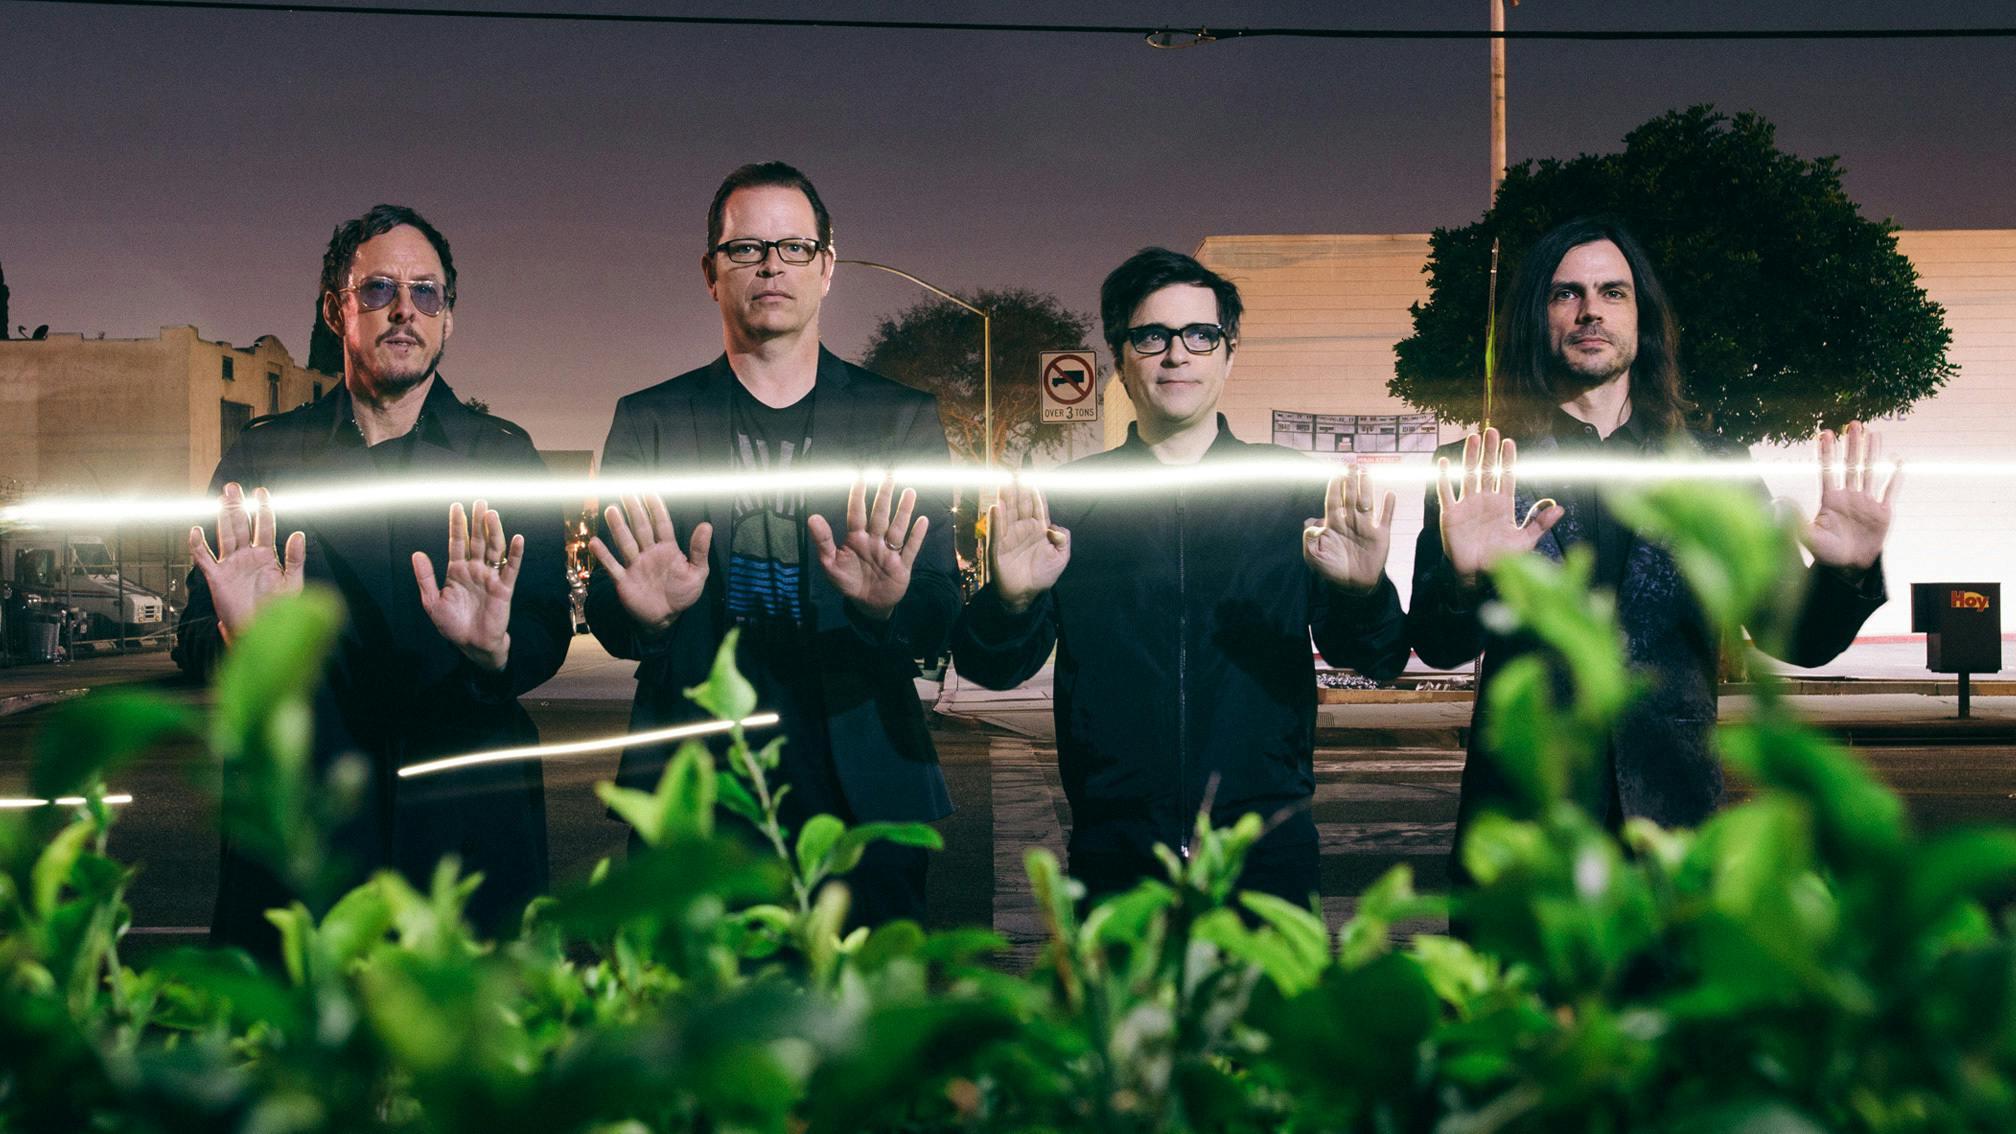 Weezer's Rivers Cuomo details idea to work on a "four-album set" with each record corresponding to a season